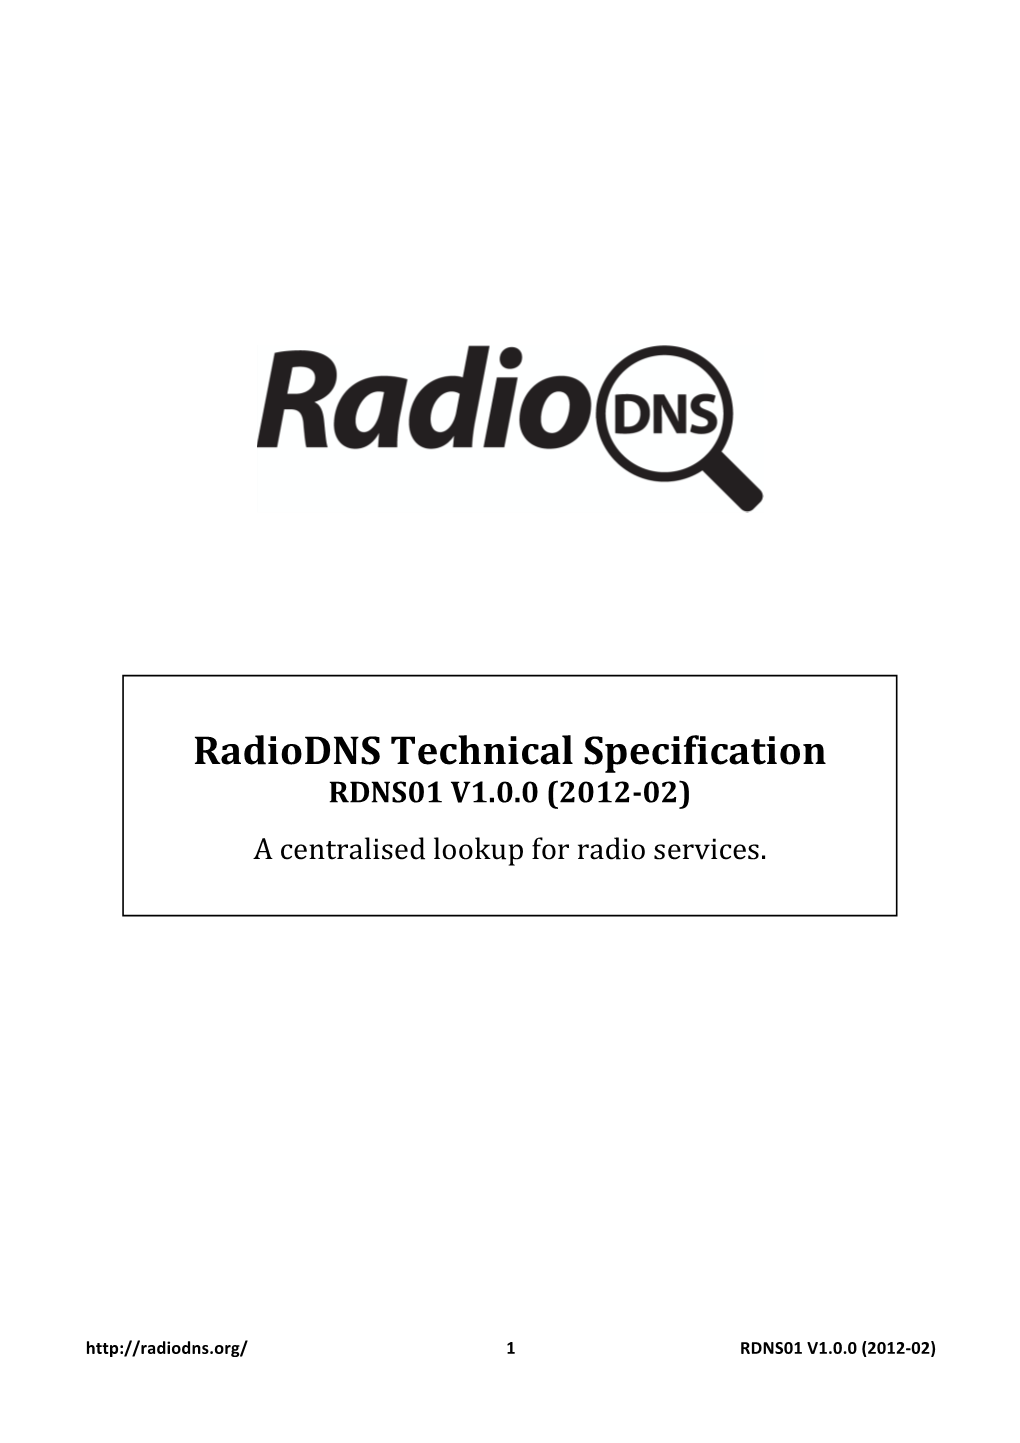 Radiodns Core Lookup – RDNS01 V1.0.0